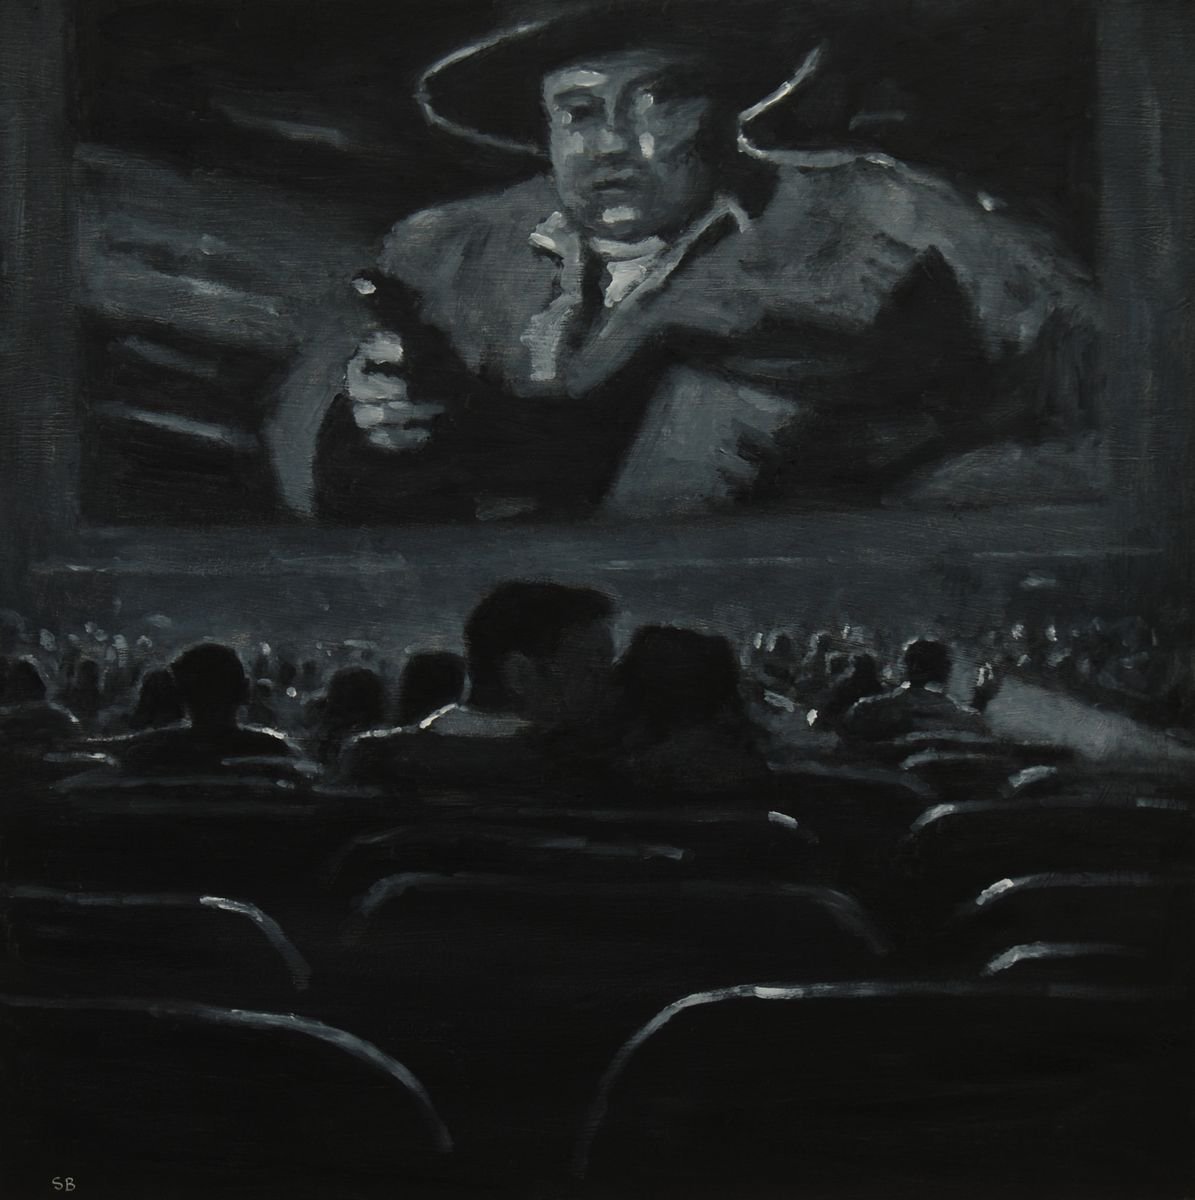 Movie theatre. by Stephen Brook